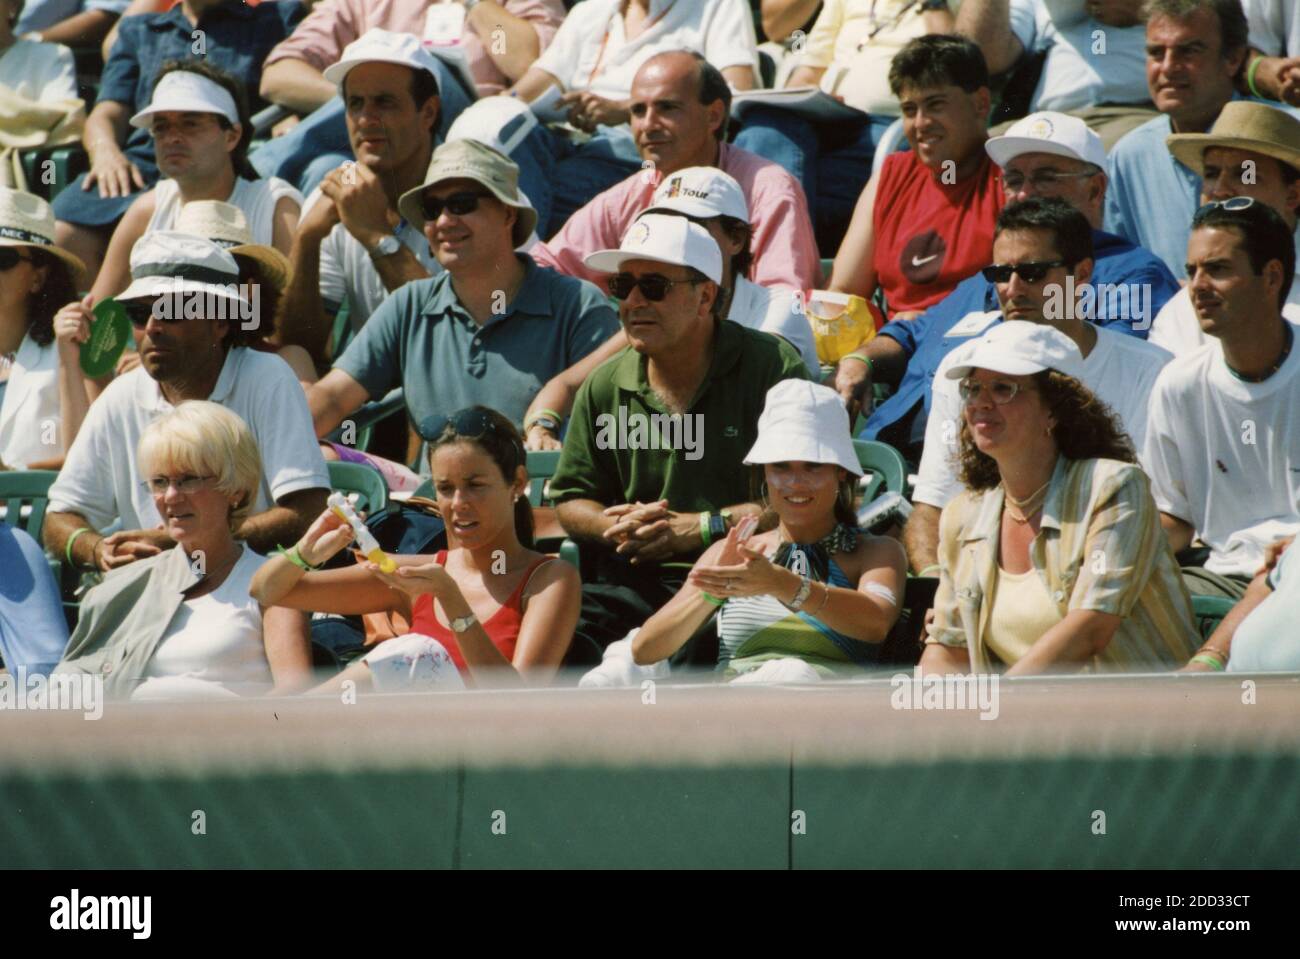 Marta, wife of Spanish tennis player Alex Corretja and Christina, wife of Alberto Costa, watching the tennis match, 2000 Stock Photo